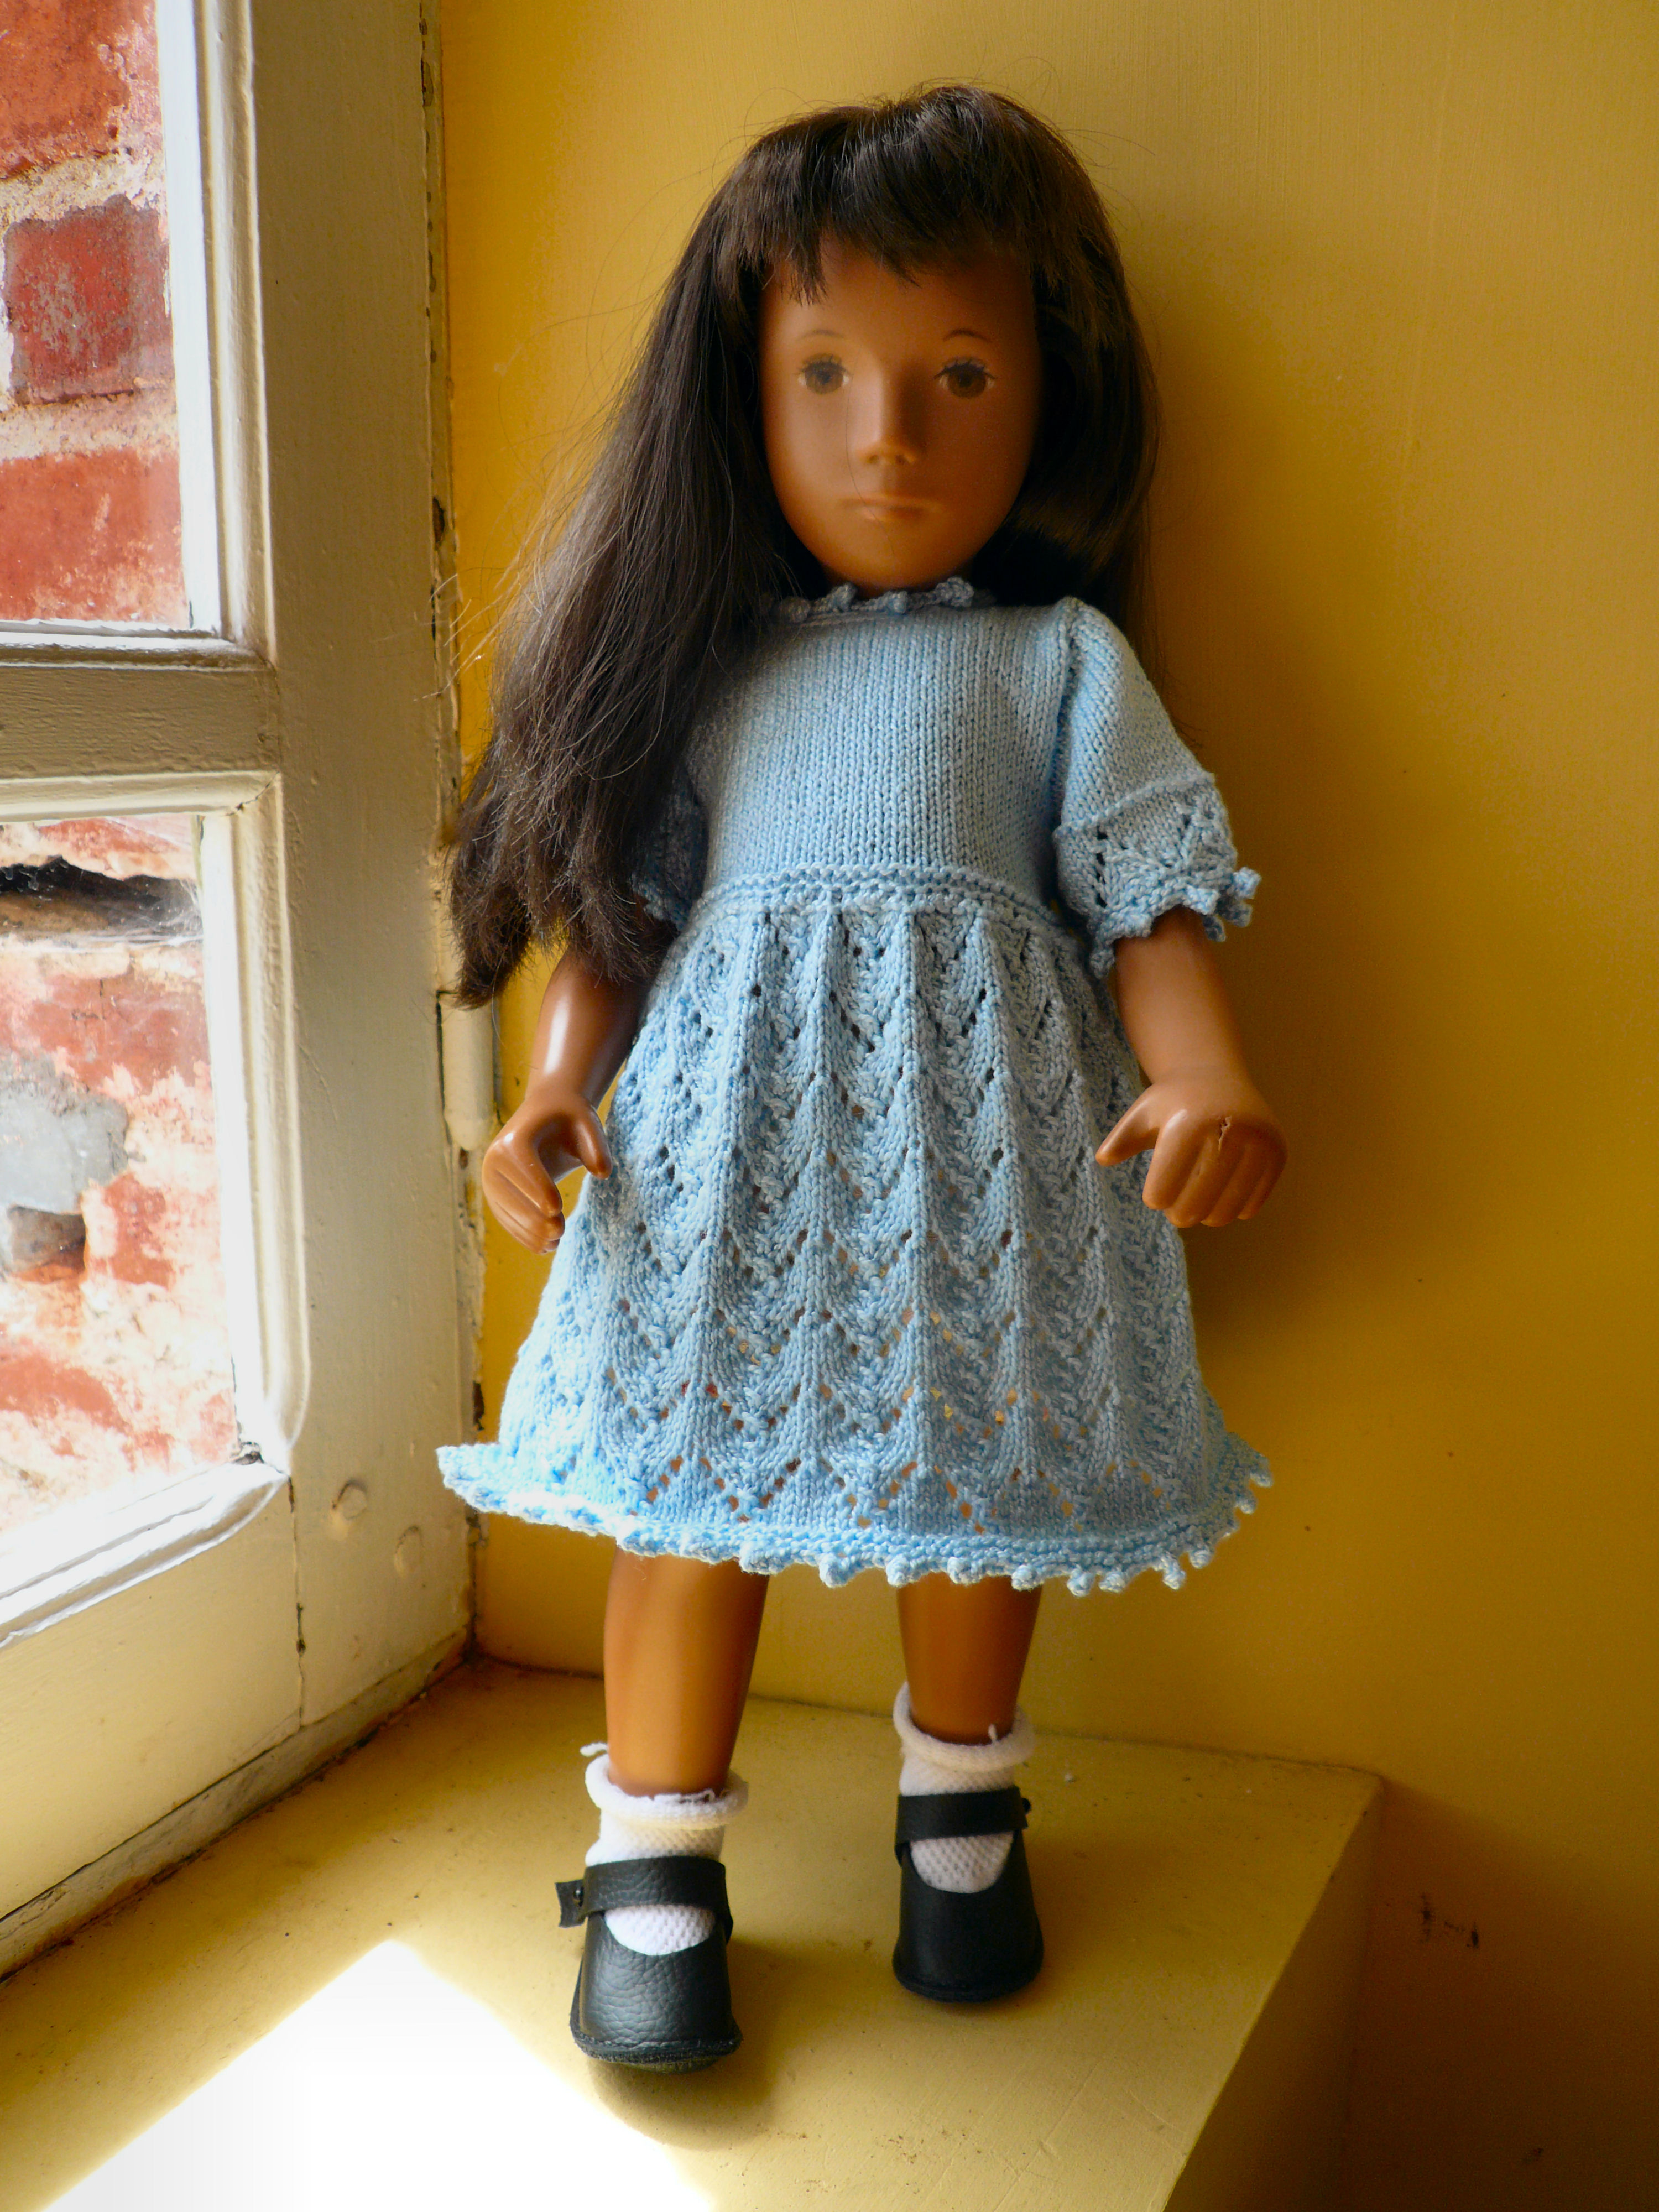 Blue dress on doll